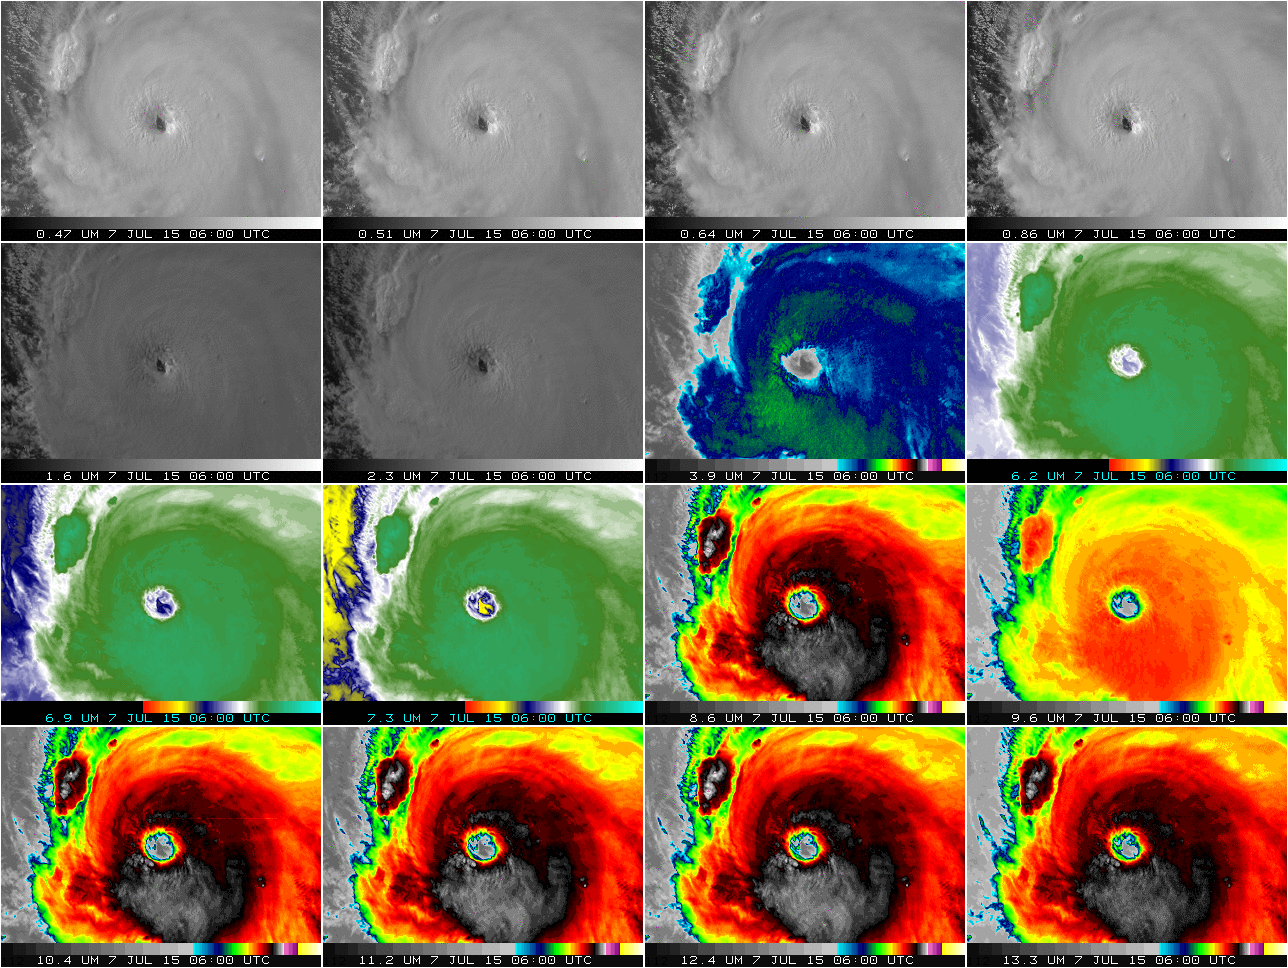 Himawari-8 data, all AHI channels, over Typhoon Nangka, 0400 UTC 5 July 2015 - 0810 UTC 7 July 2015, (Click to animate)